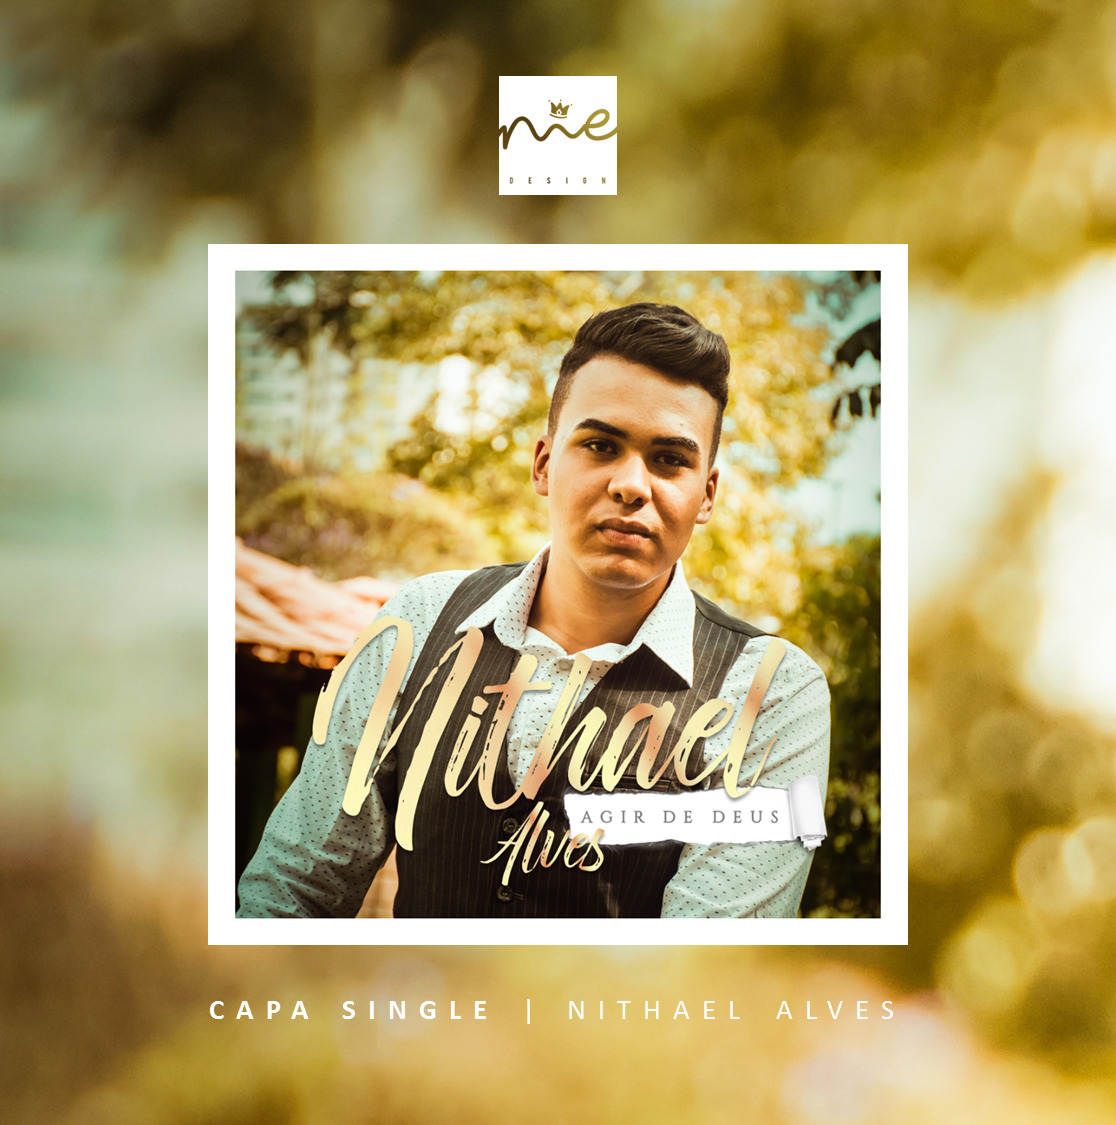 Assista agora “Agir de Deus” novo single de Nithael Alves do seu primeiro álbum!